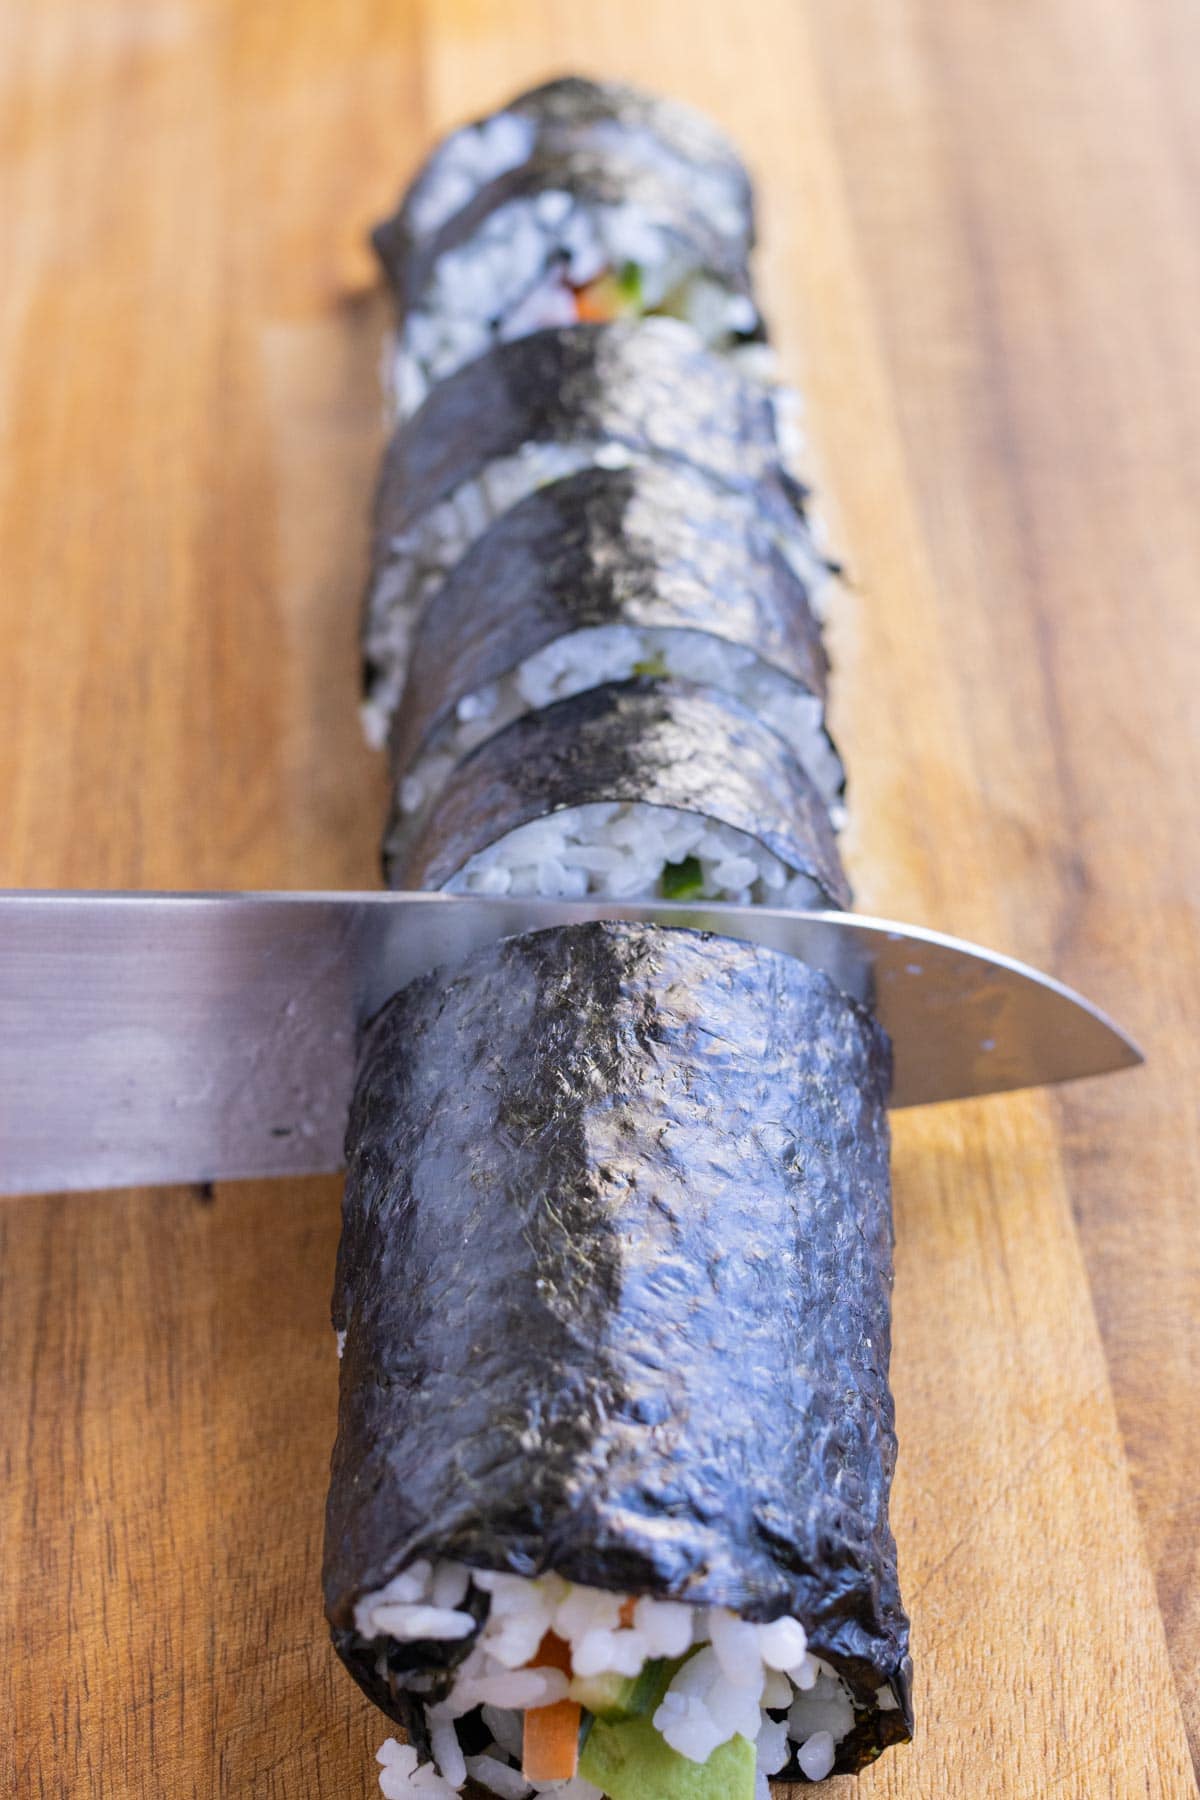 Preparing the Rolling Mat – Sushi Day